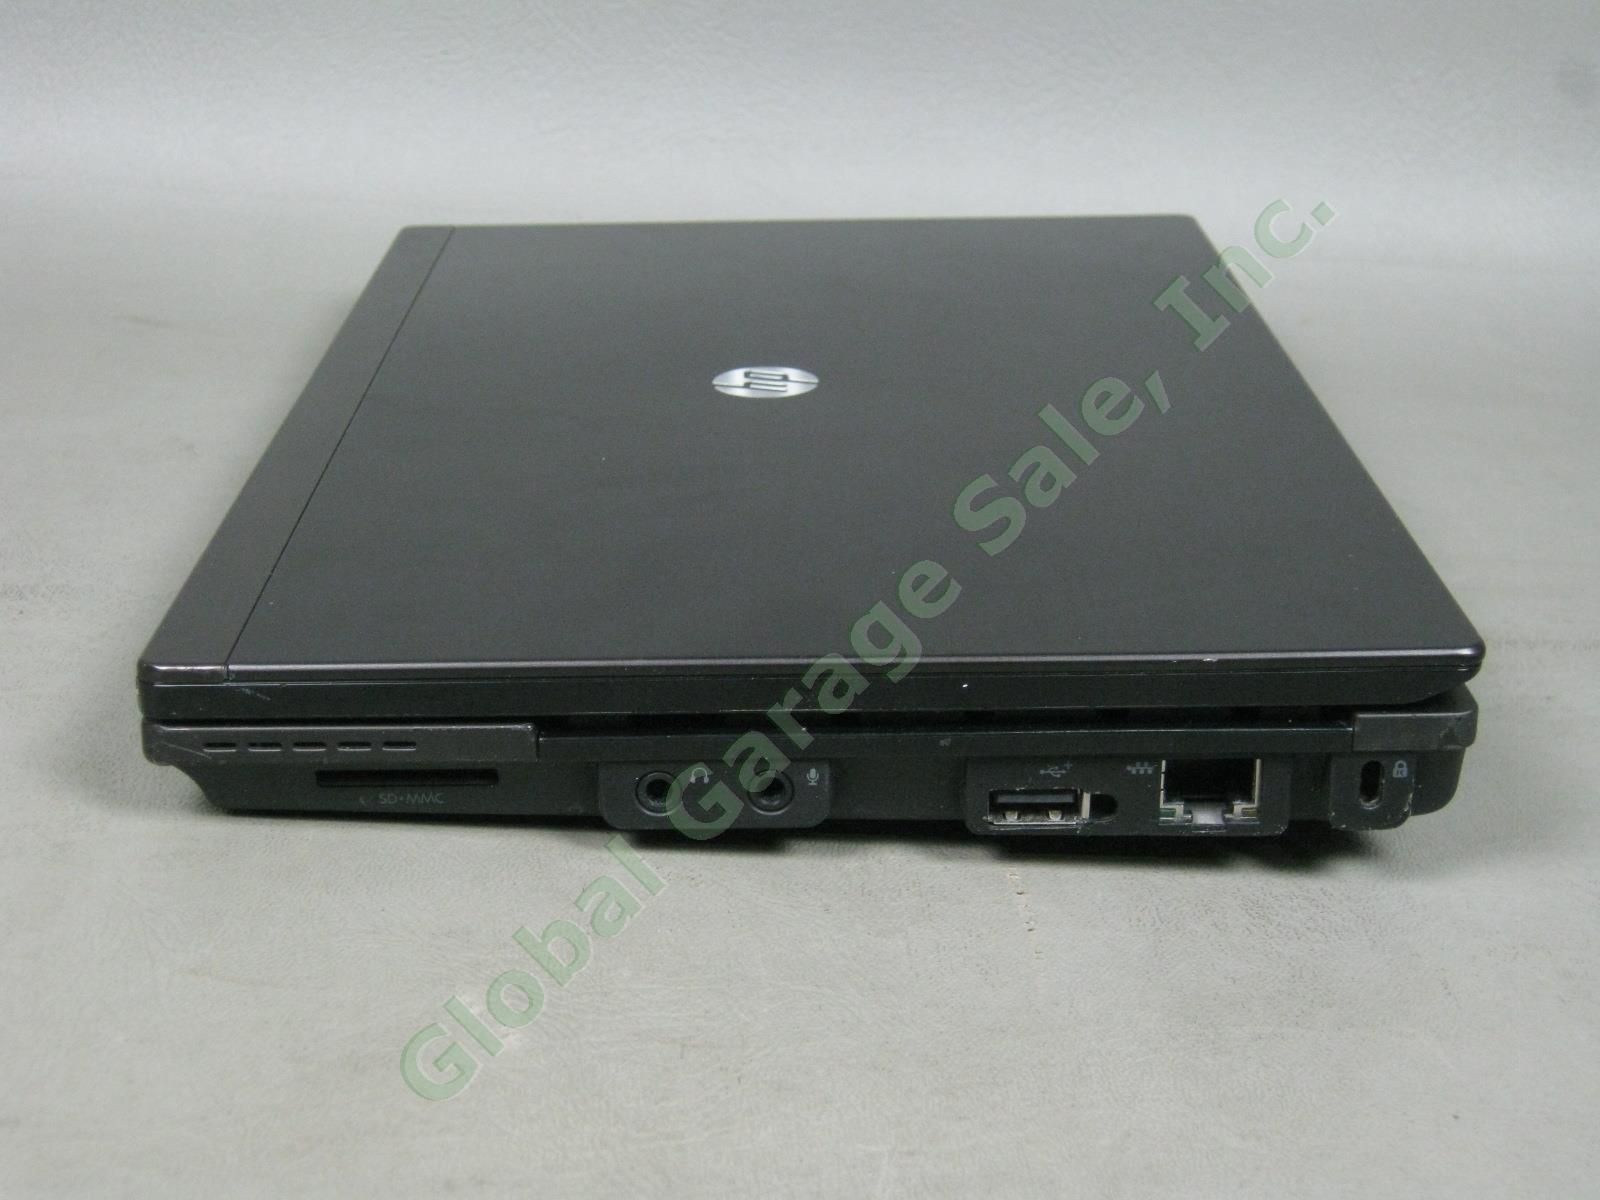 HP Mini 5103 10.1" Netbook Laptop Intel Atom 1.83GHz 2GB RAM 160GB HDD Windows 7 6